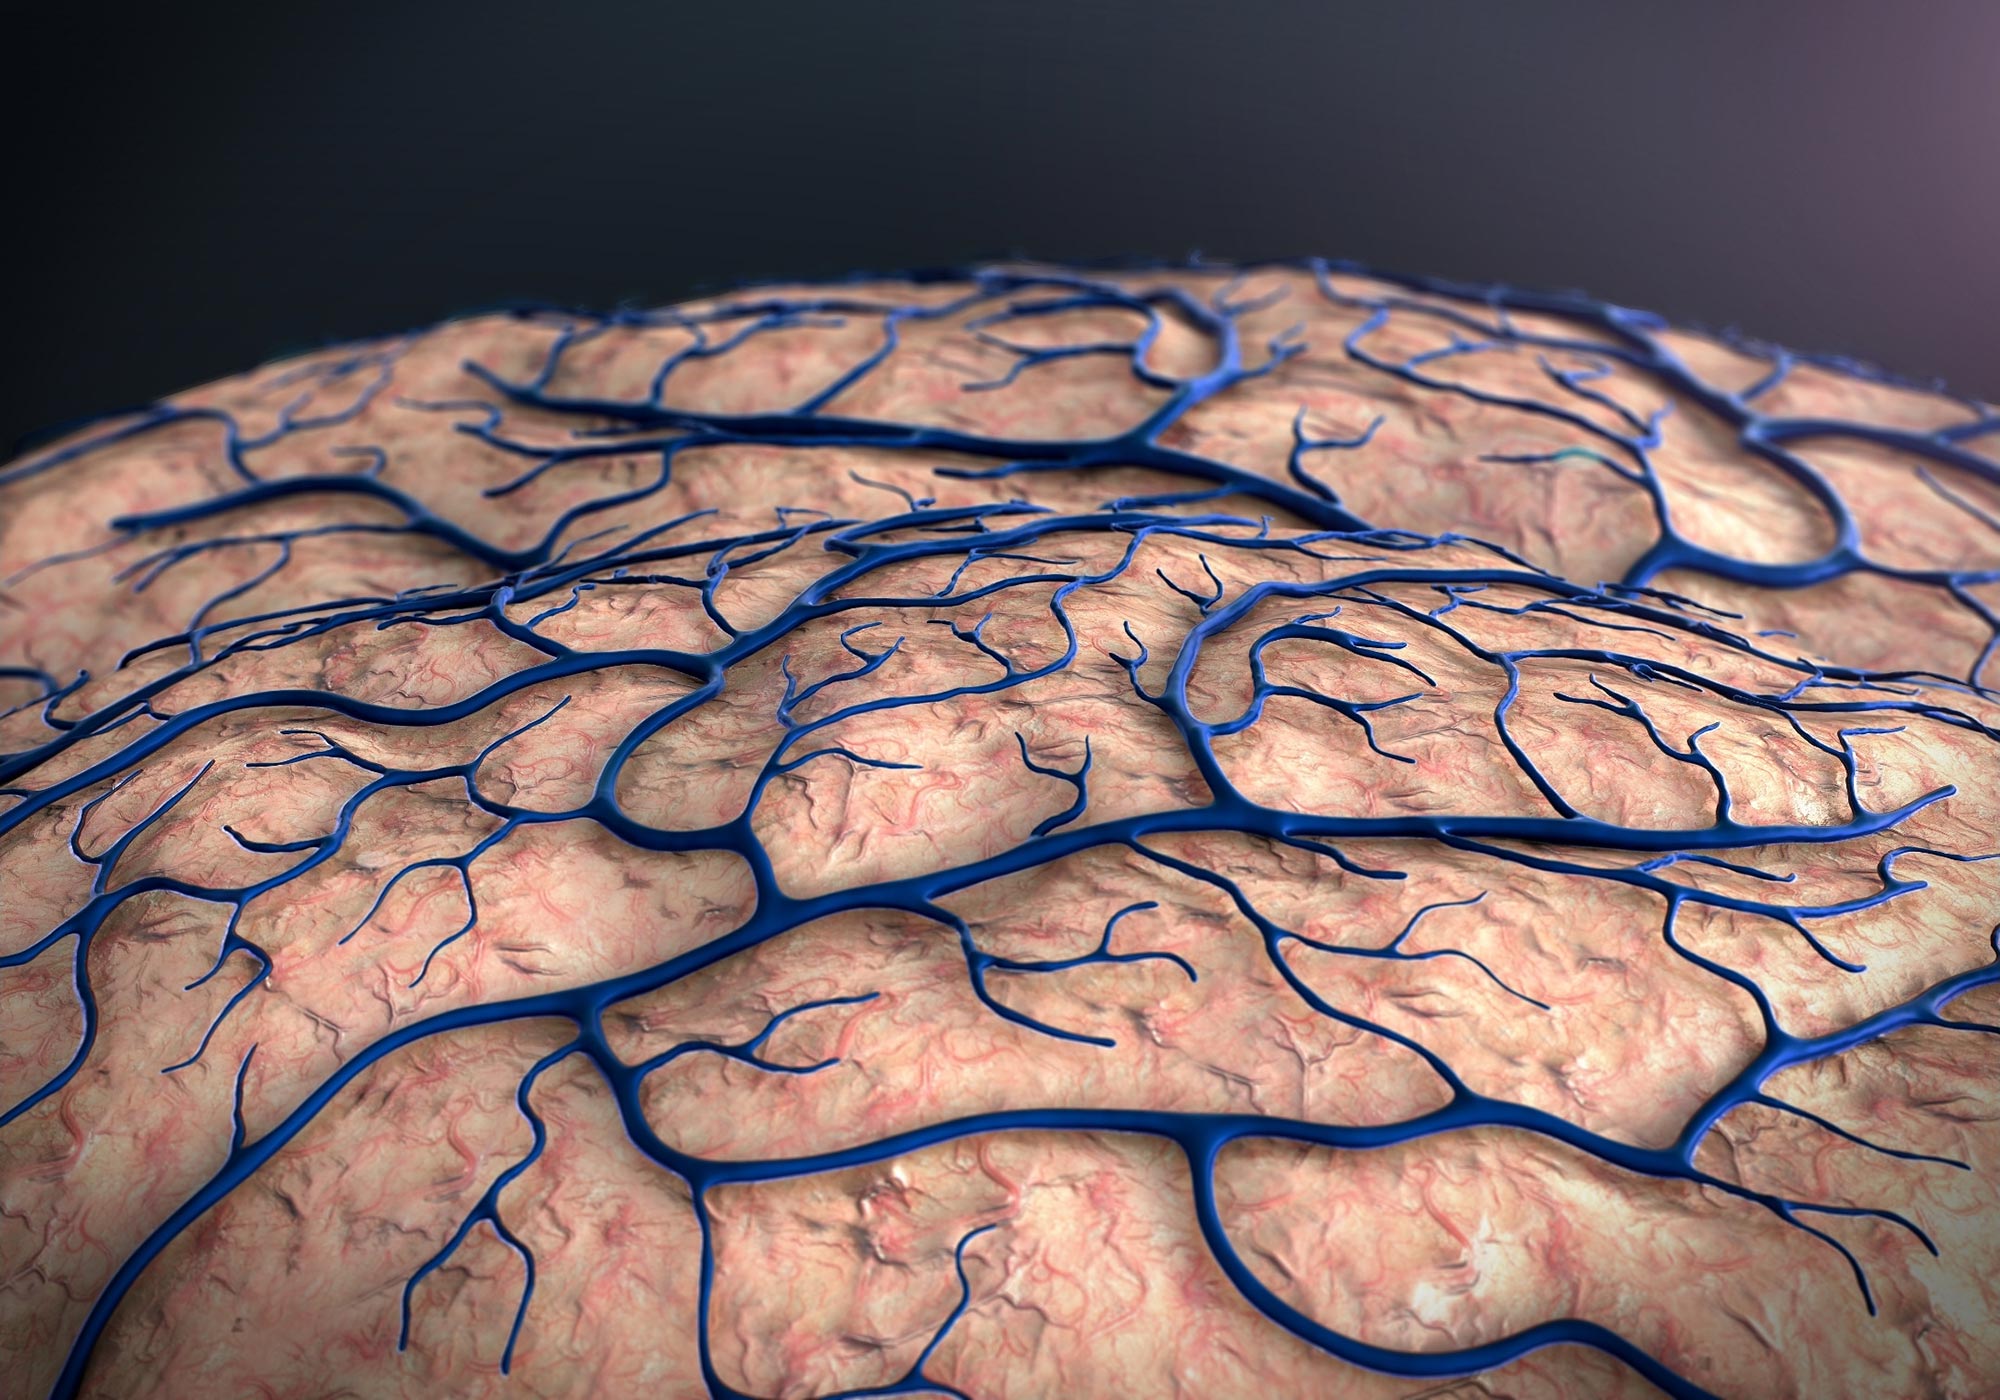 Schizophrenia: Brain Capillary Structures Show a Correlation With Their Neuron Structures